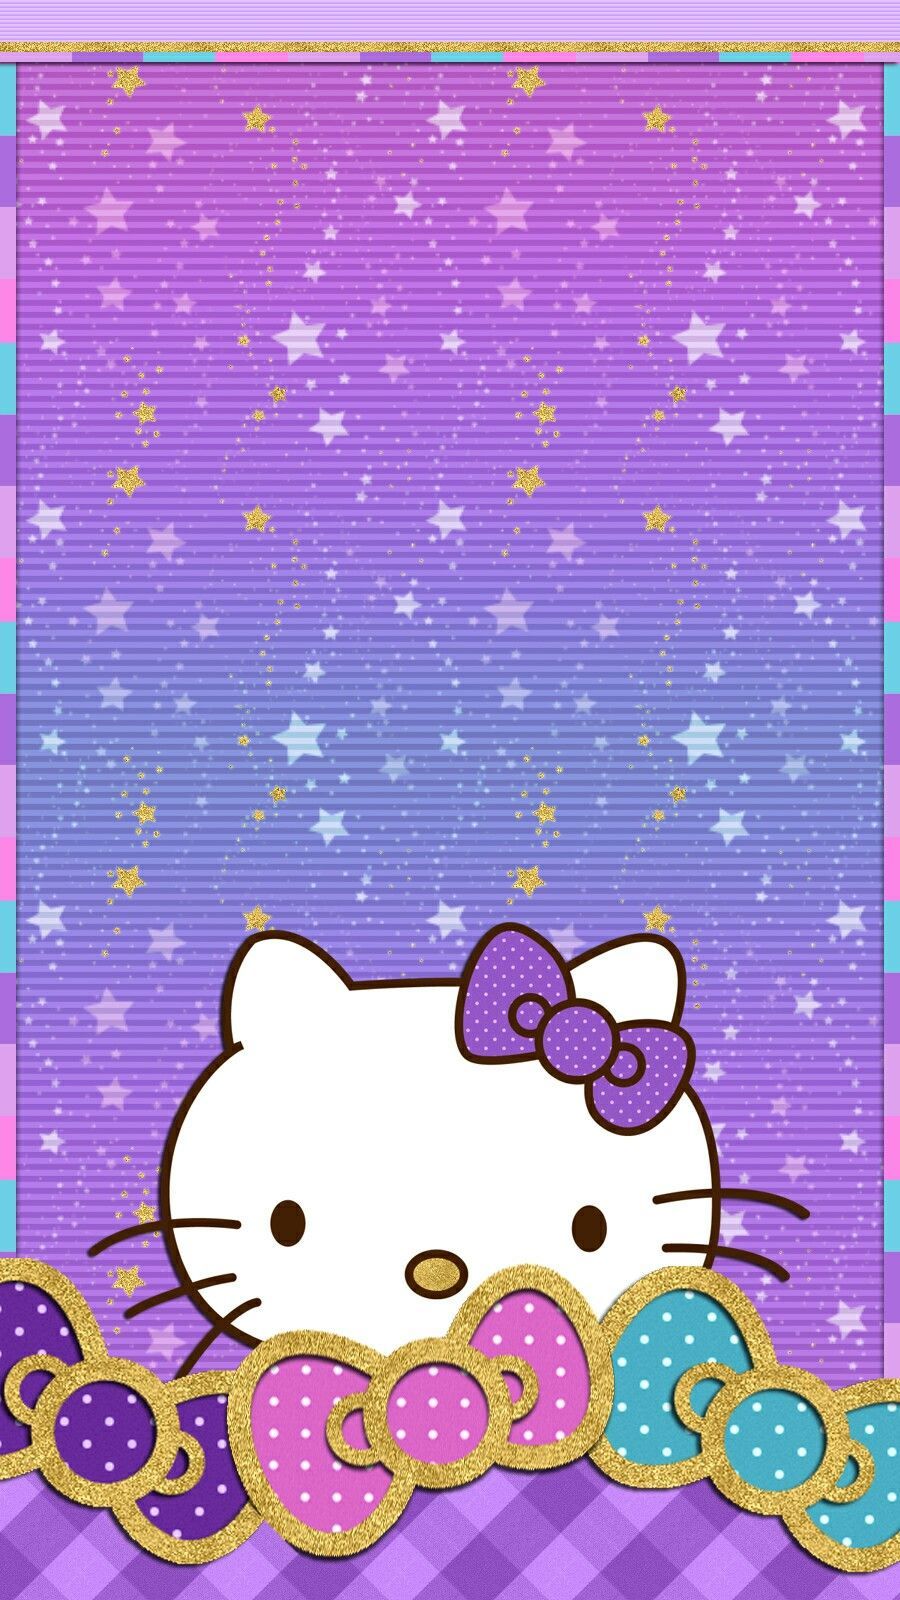 Hk wallpaper iphone. Hello kitty, Gambar karakter, Wallpaper iphone